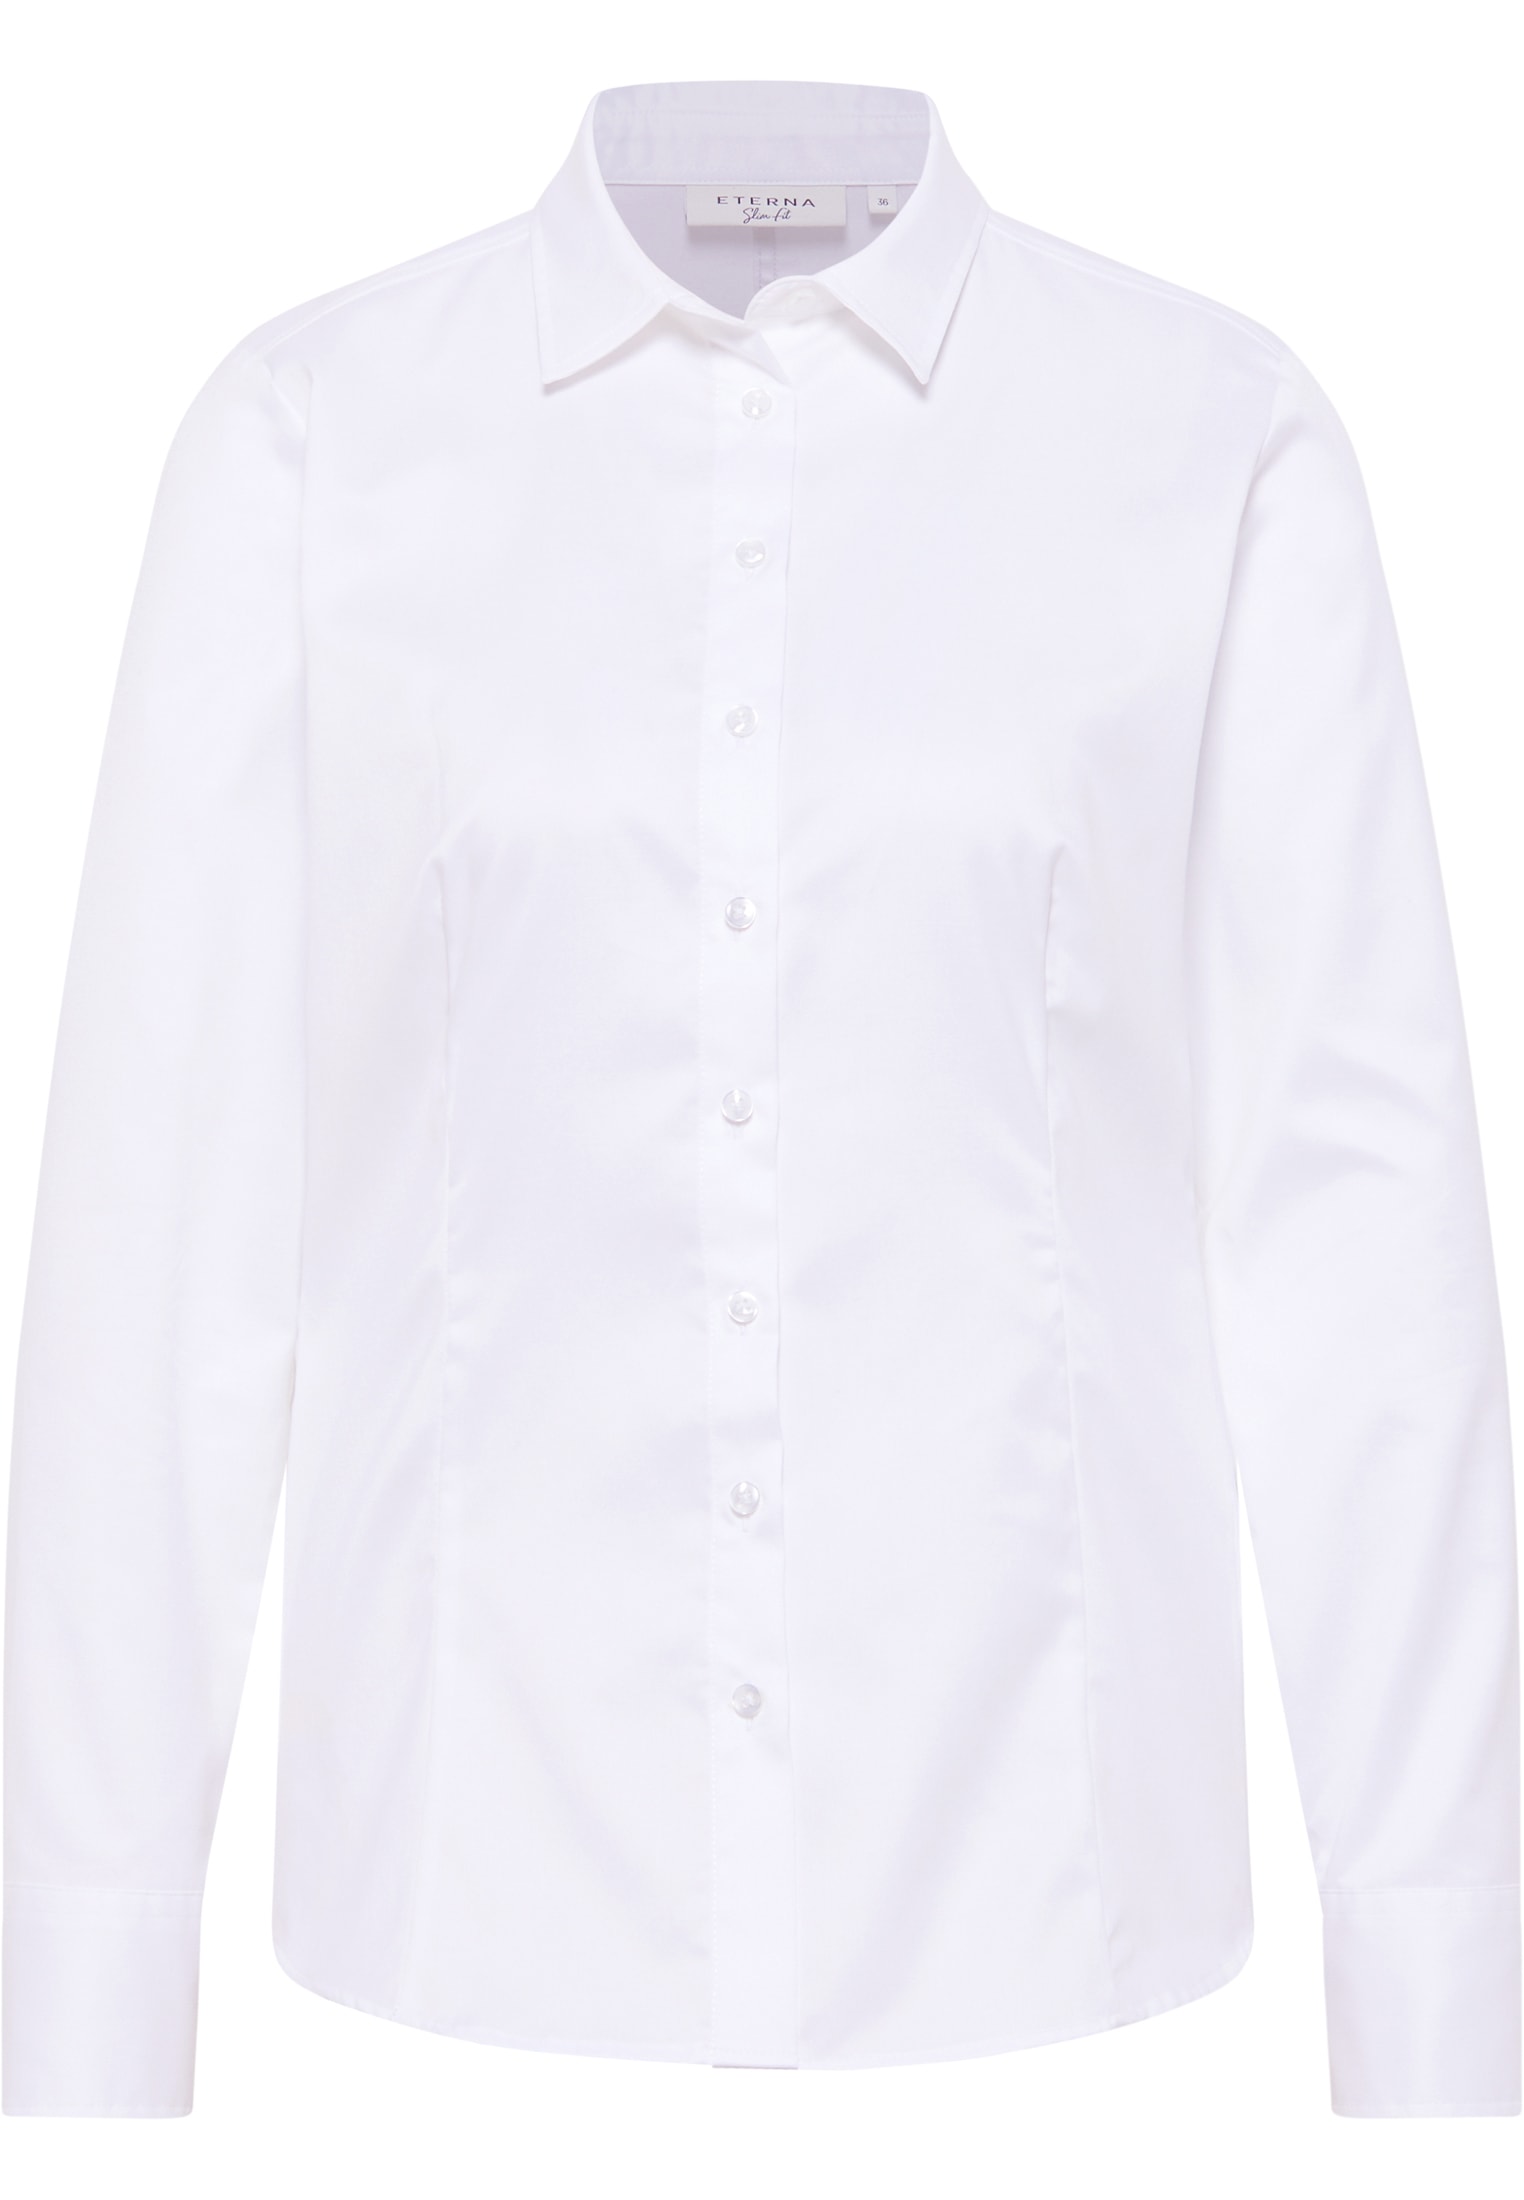 | | Shirt 34 weiß | weiß in Cover | Langarm 2BL00073-00-01-34-1/1 unifarben Bluse